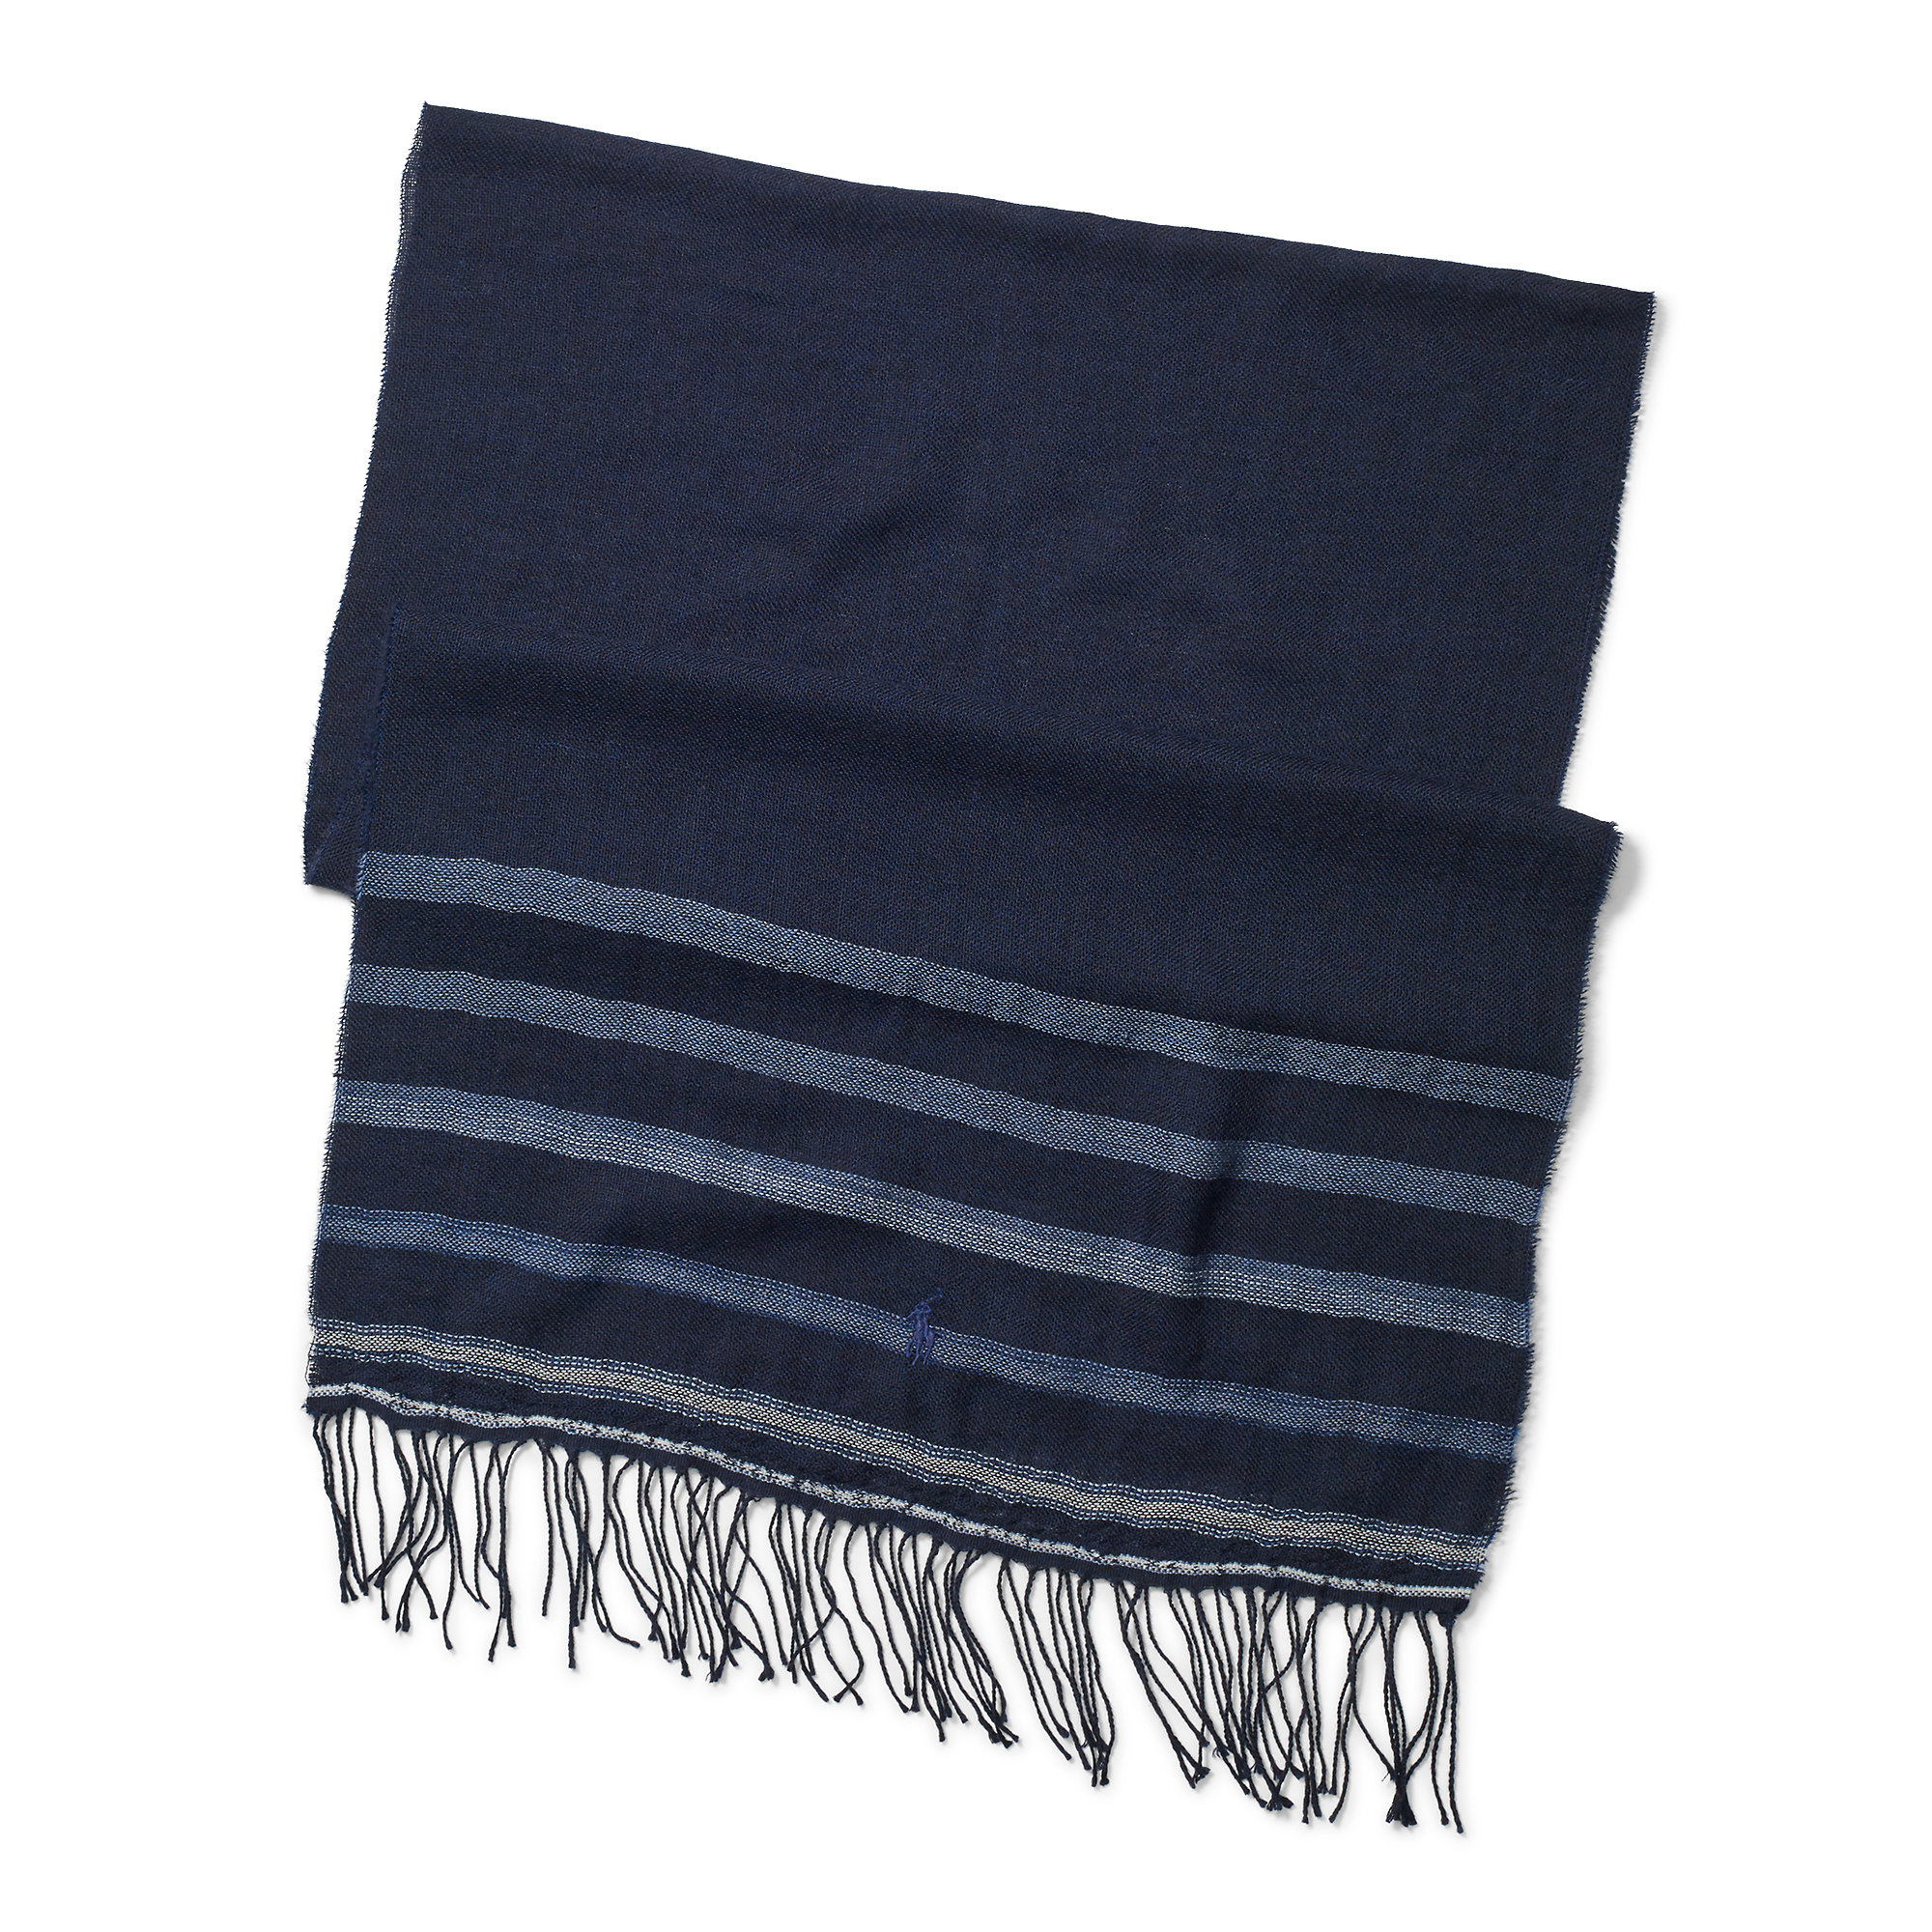 Lyst - Polo Ralph Lauren Lightweight Striped Wool Scarf in Blue for Men